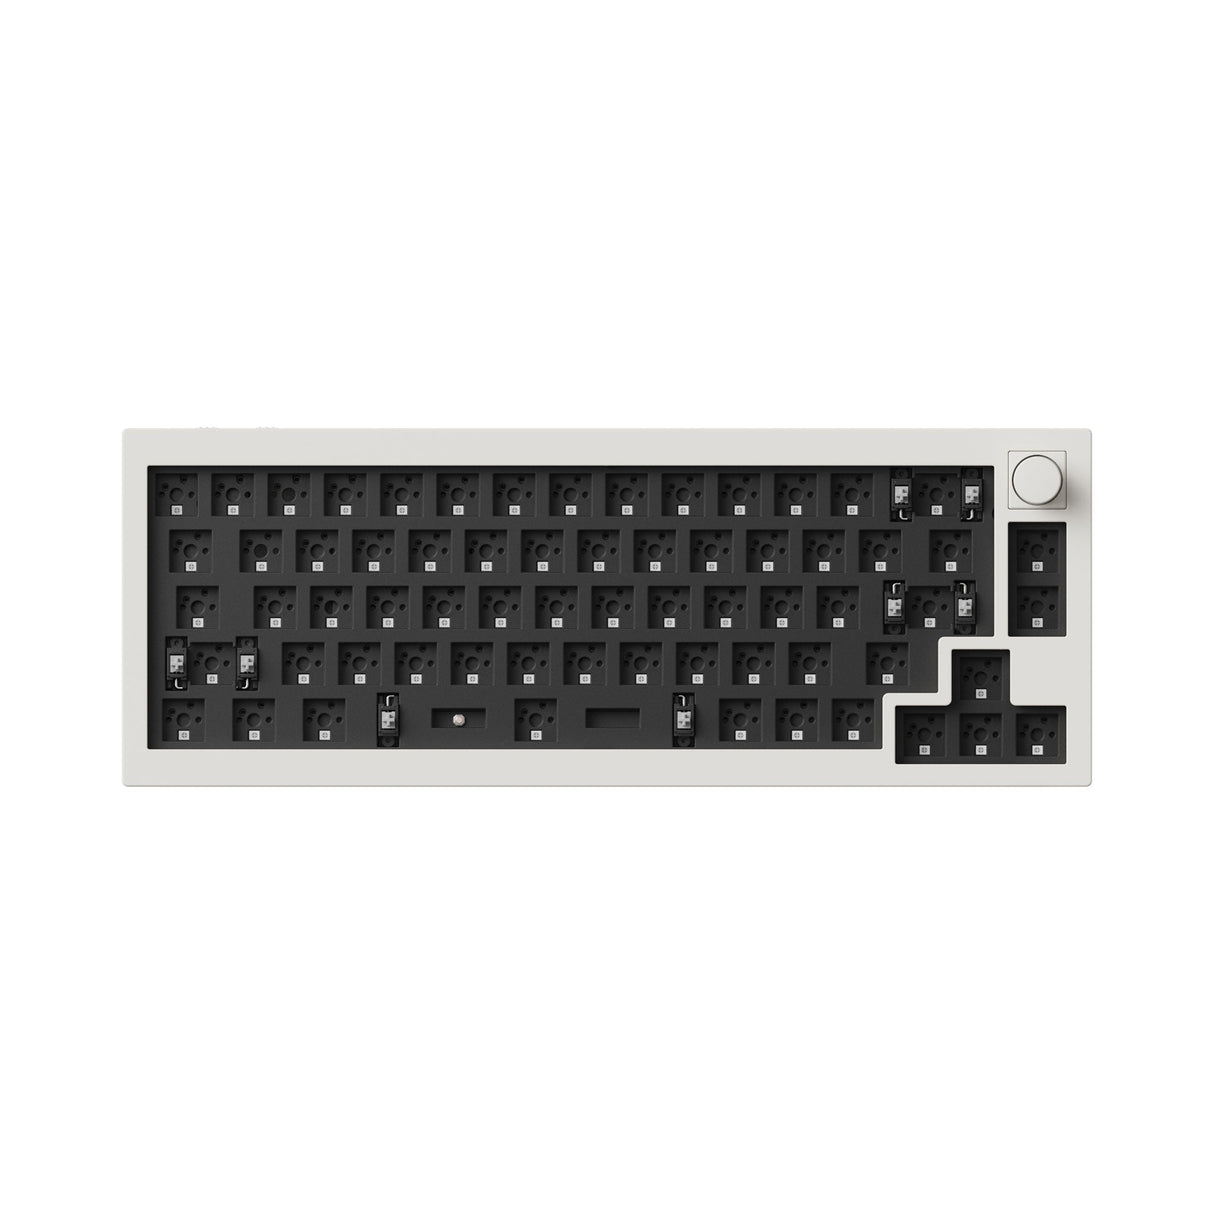 Keychron Q2 Max QMK VIA Wireless Custom Mechanical Keyboard 65 Layout Aluminum White for Mac Windows Linux Barebone Knob